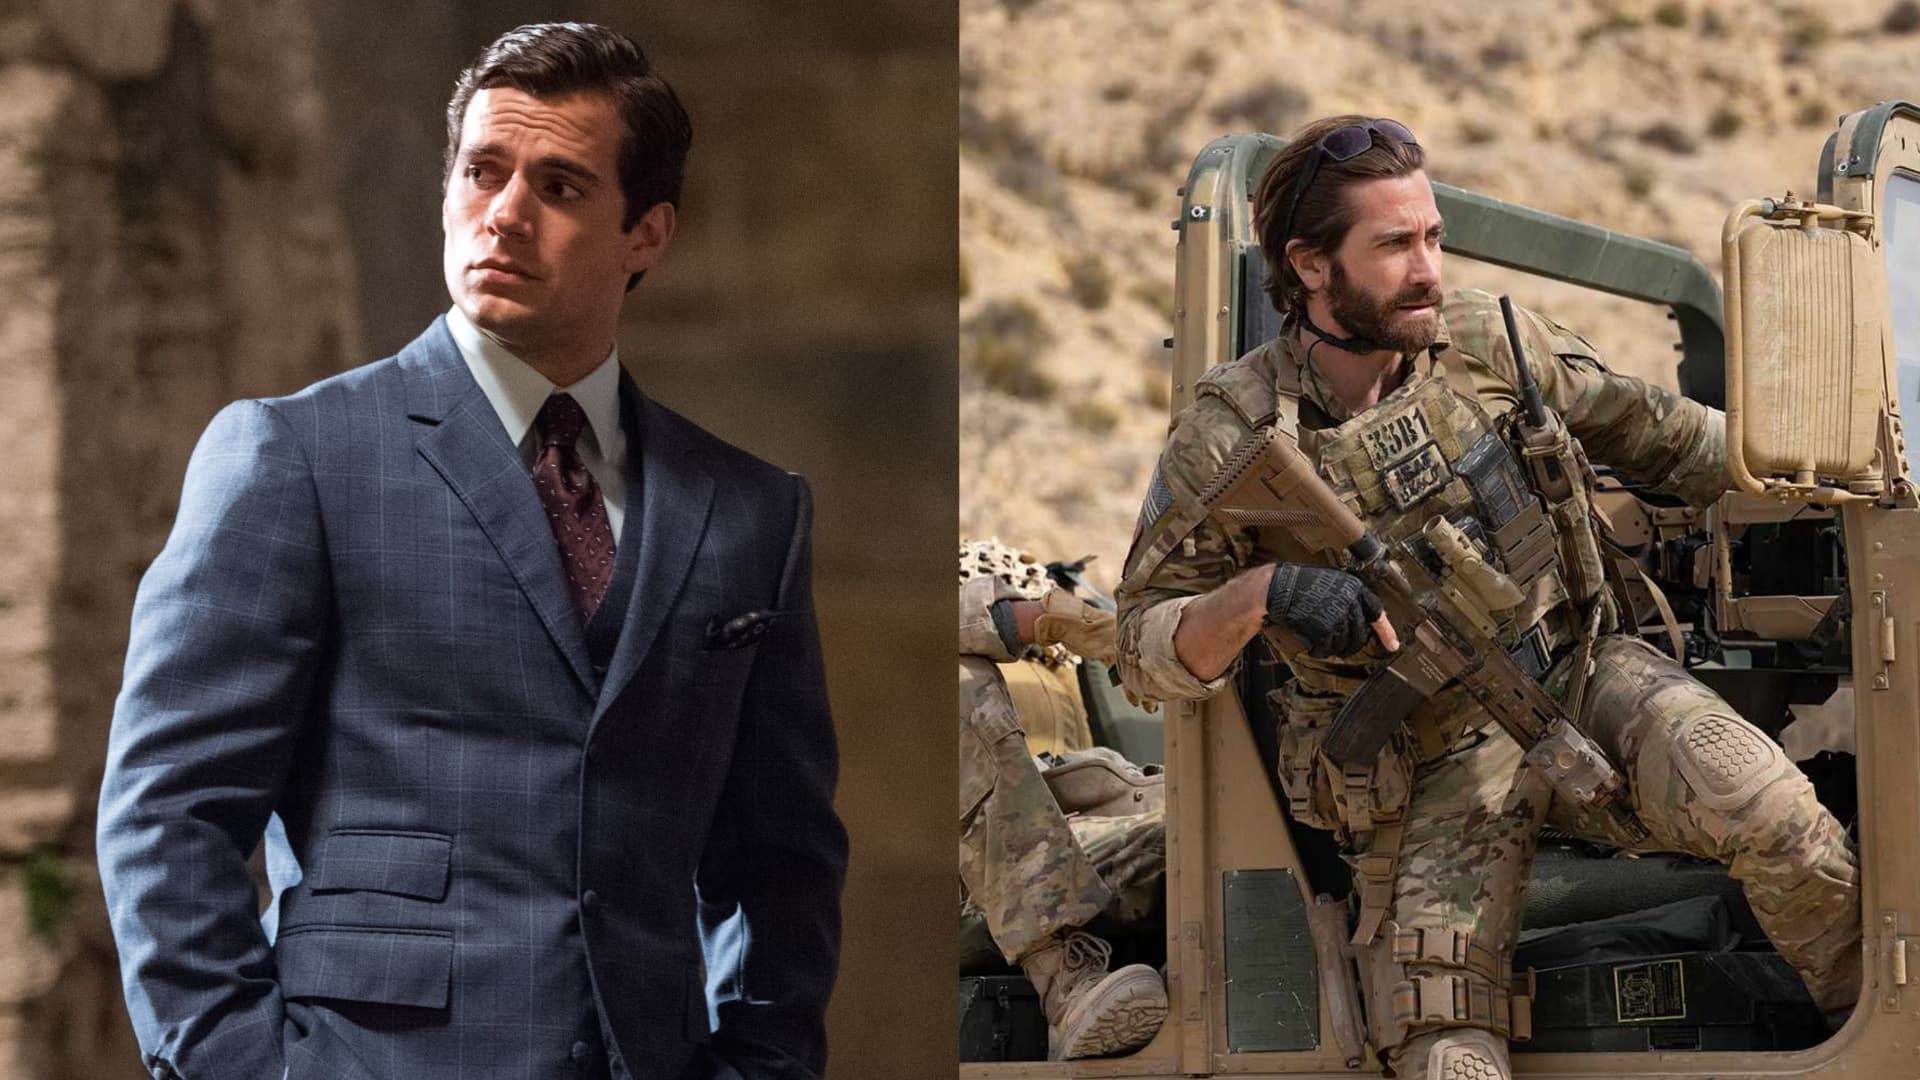 Henry Cavill, Jake Gyllenhaal, Eiza González Lead New Guy Ritchie Film –  Deadline